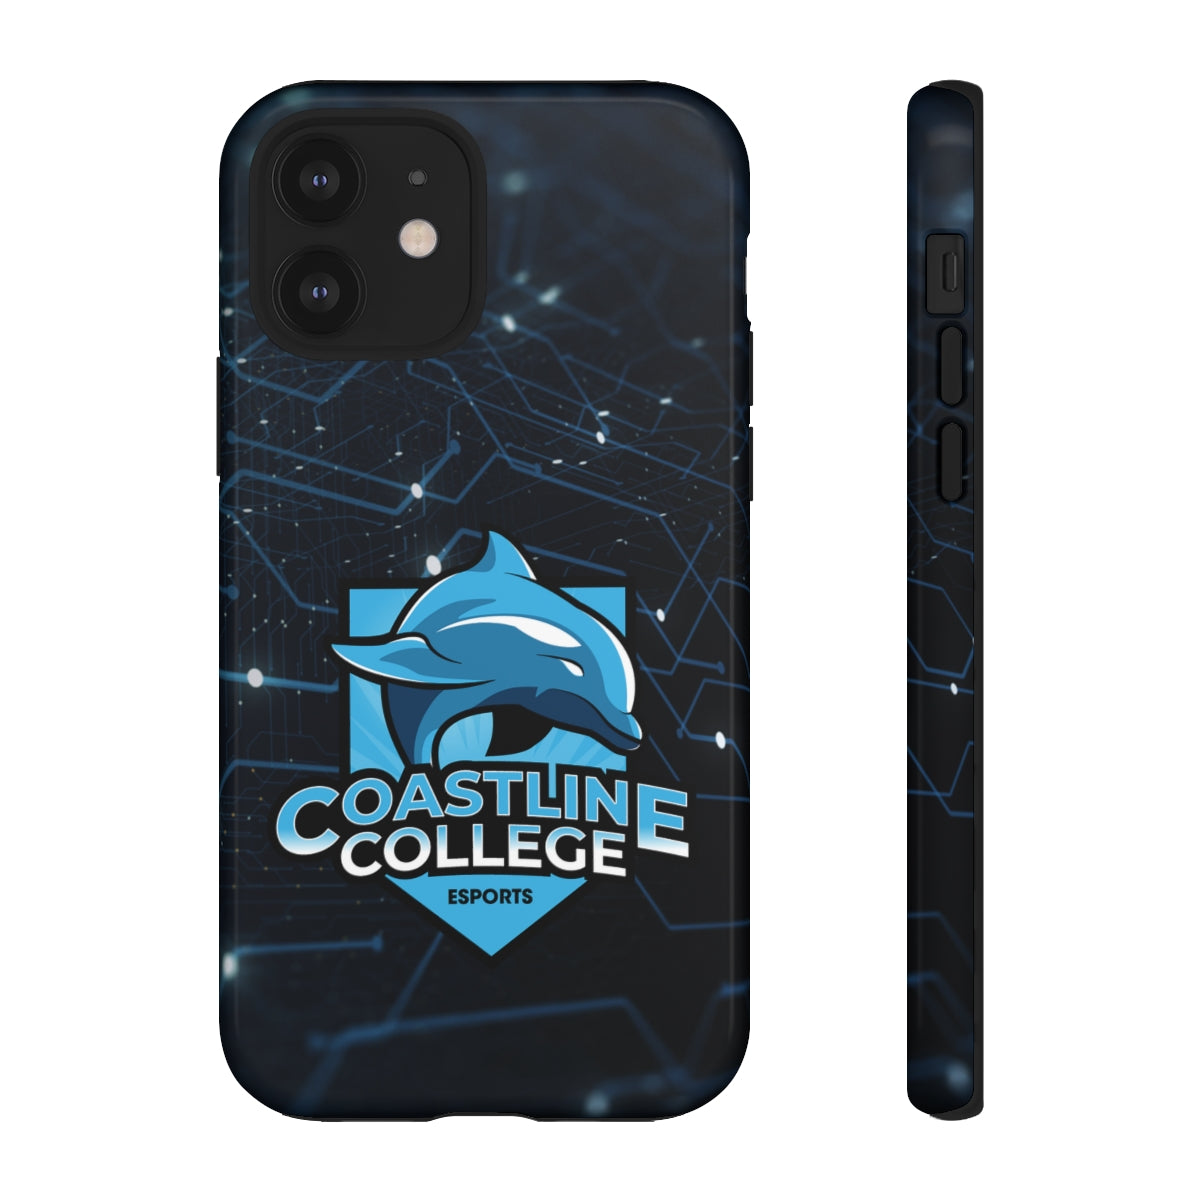 Coastline Esports Cellphone Tough Cases